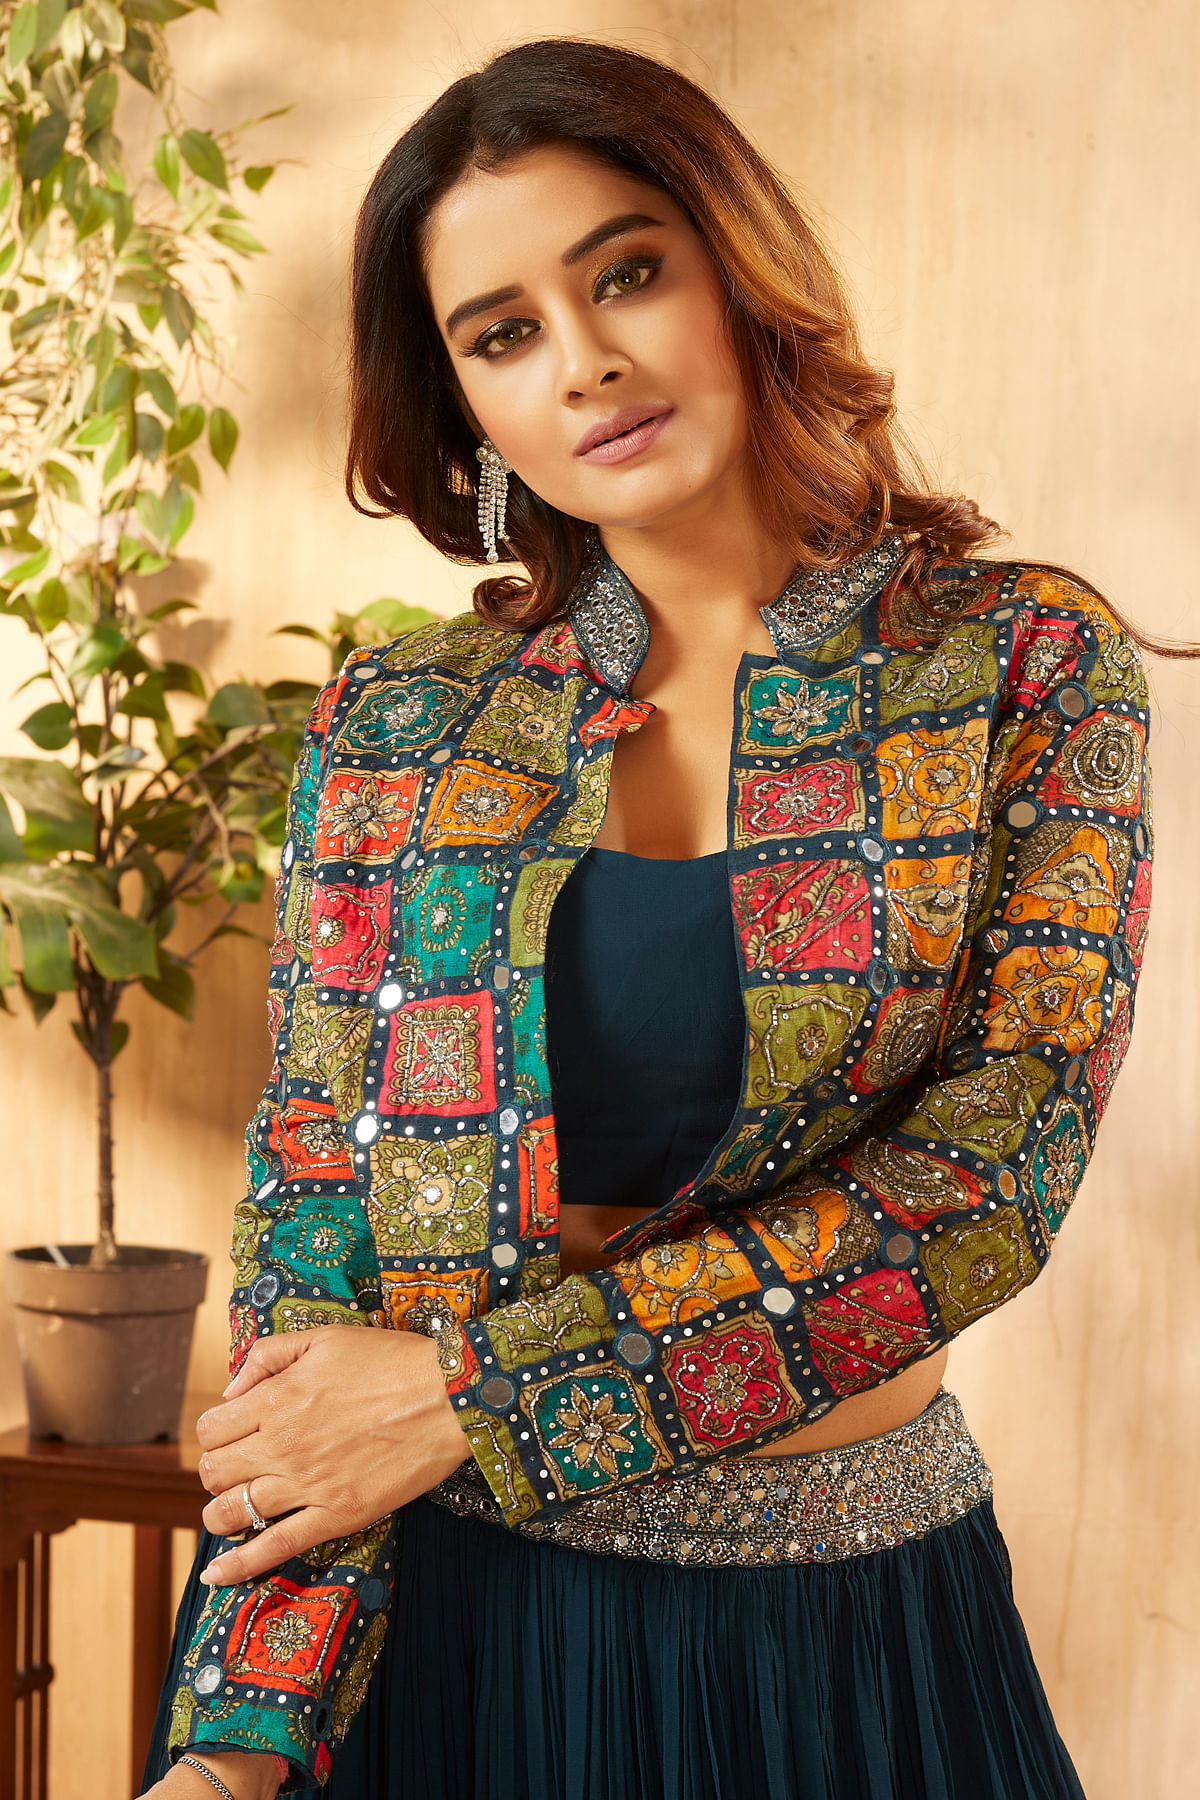 Buy VRAJ Fashion Indian Womens Stunning Lehenga Choli | Jacket Lehenga Choli  |Stitched | Unique |Trending |Ethnic Wear ORANGE Fox georgette fabric with  embroidery worked (111) at Amazon.in